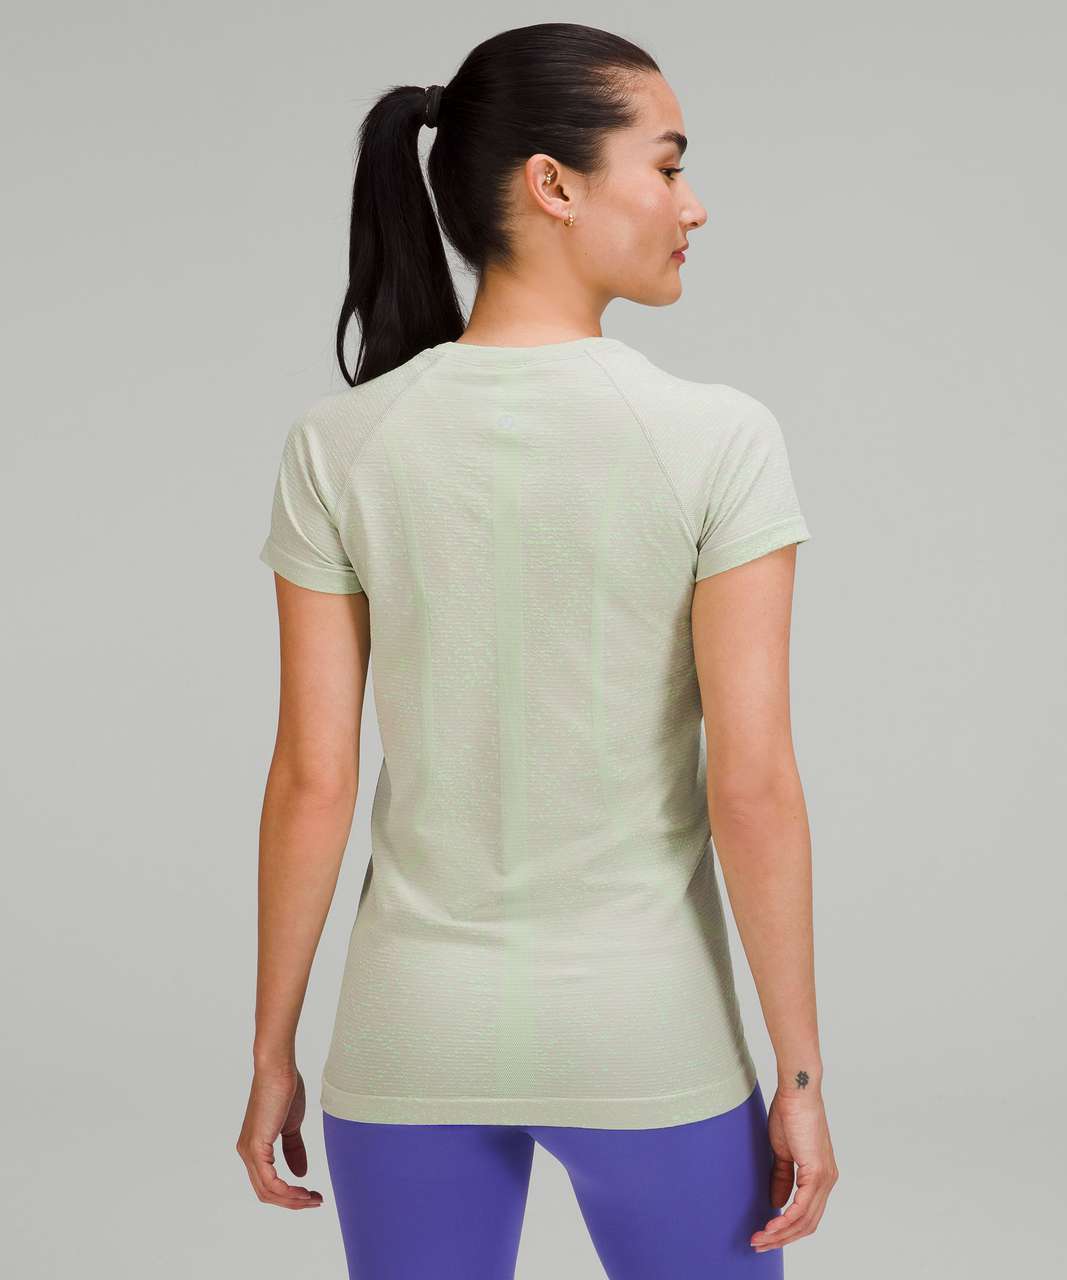 Lululemon Swiftly Tech Short Sleeve Shirt 2.0 - Distorted Noise Neon Chrome / Scream Green Light